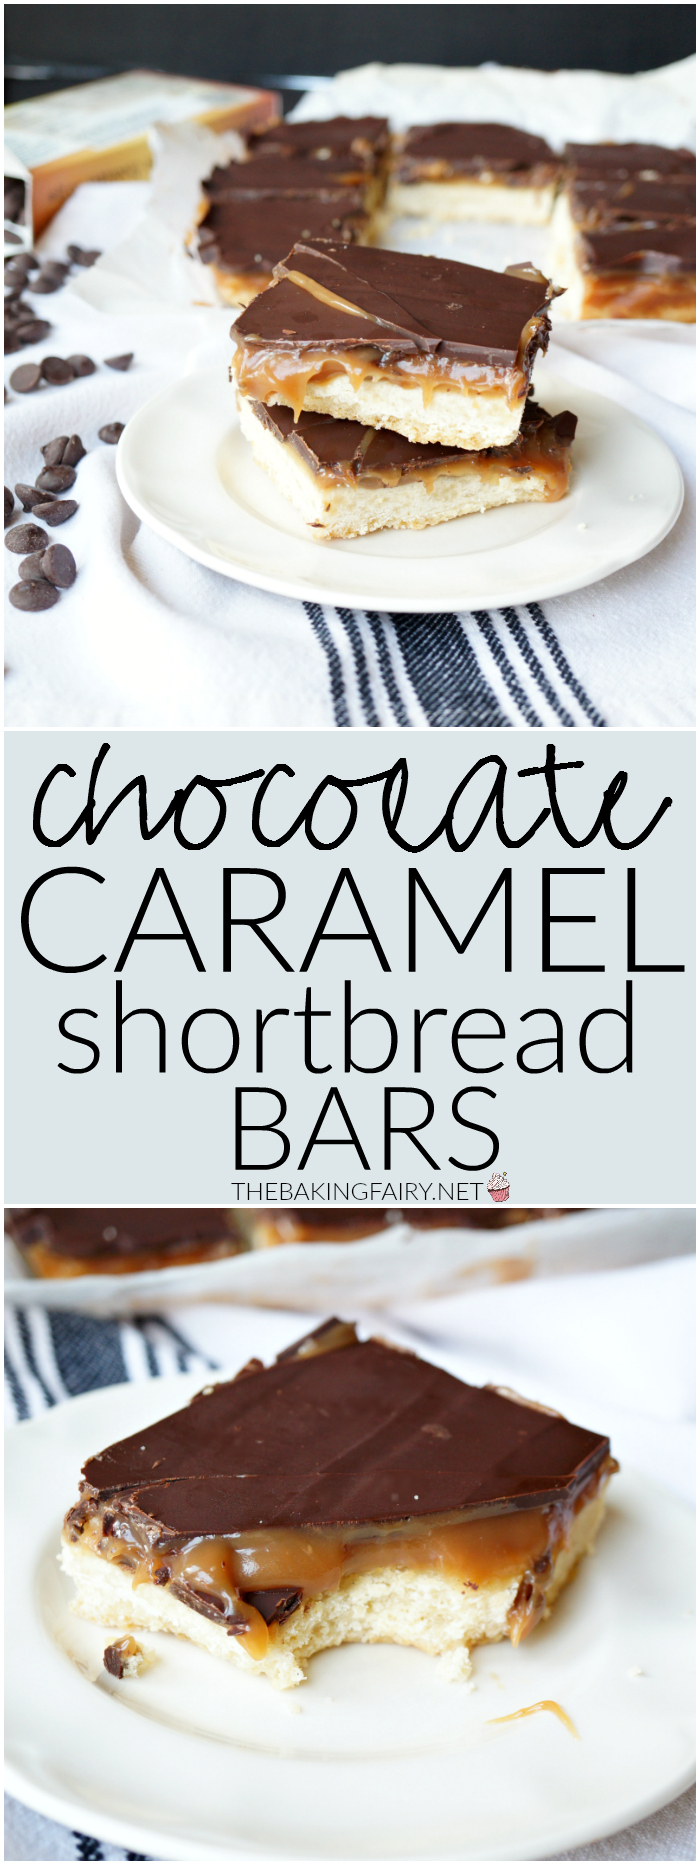 chocolate caramel shortbread bars | The Baking Fairy